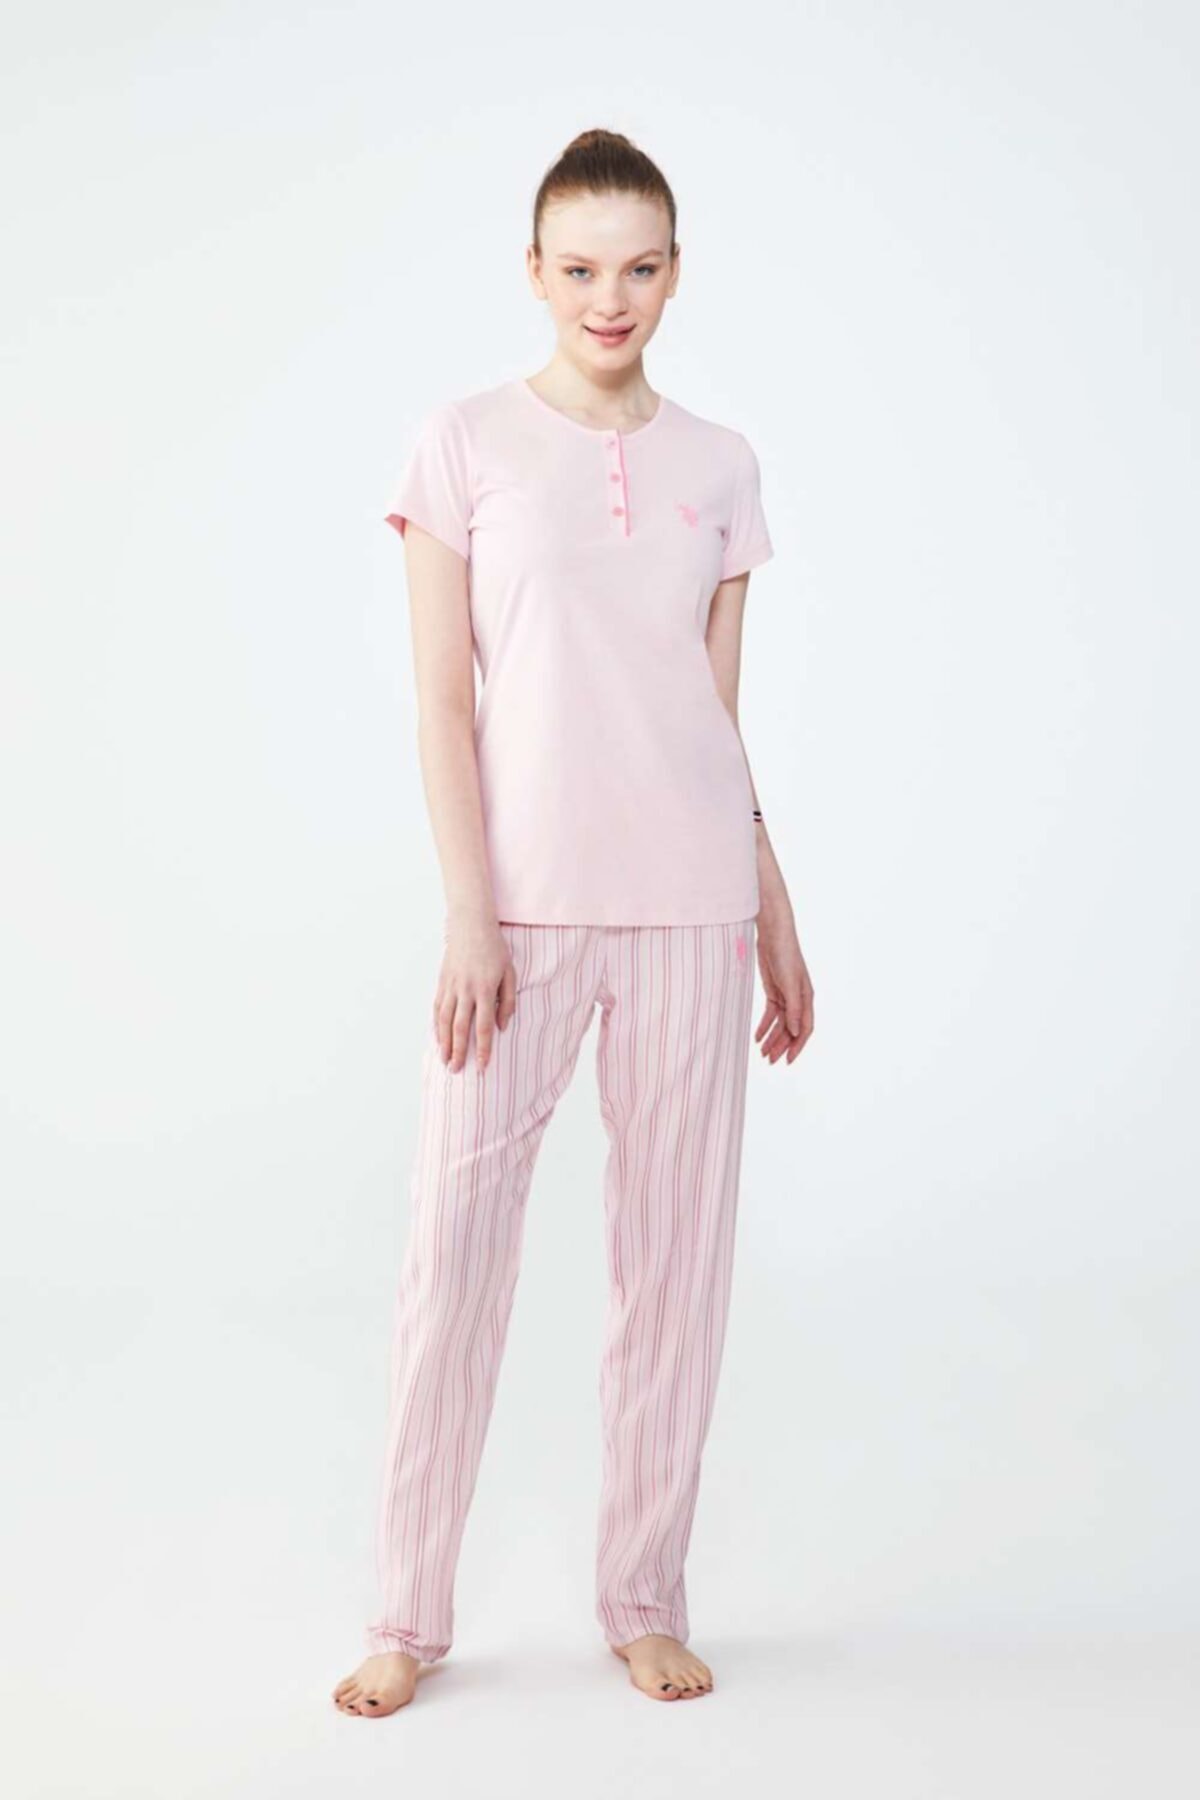 U.S. Polo Assn. Kadın Pudra Patlı Pijama Takımı